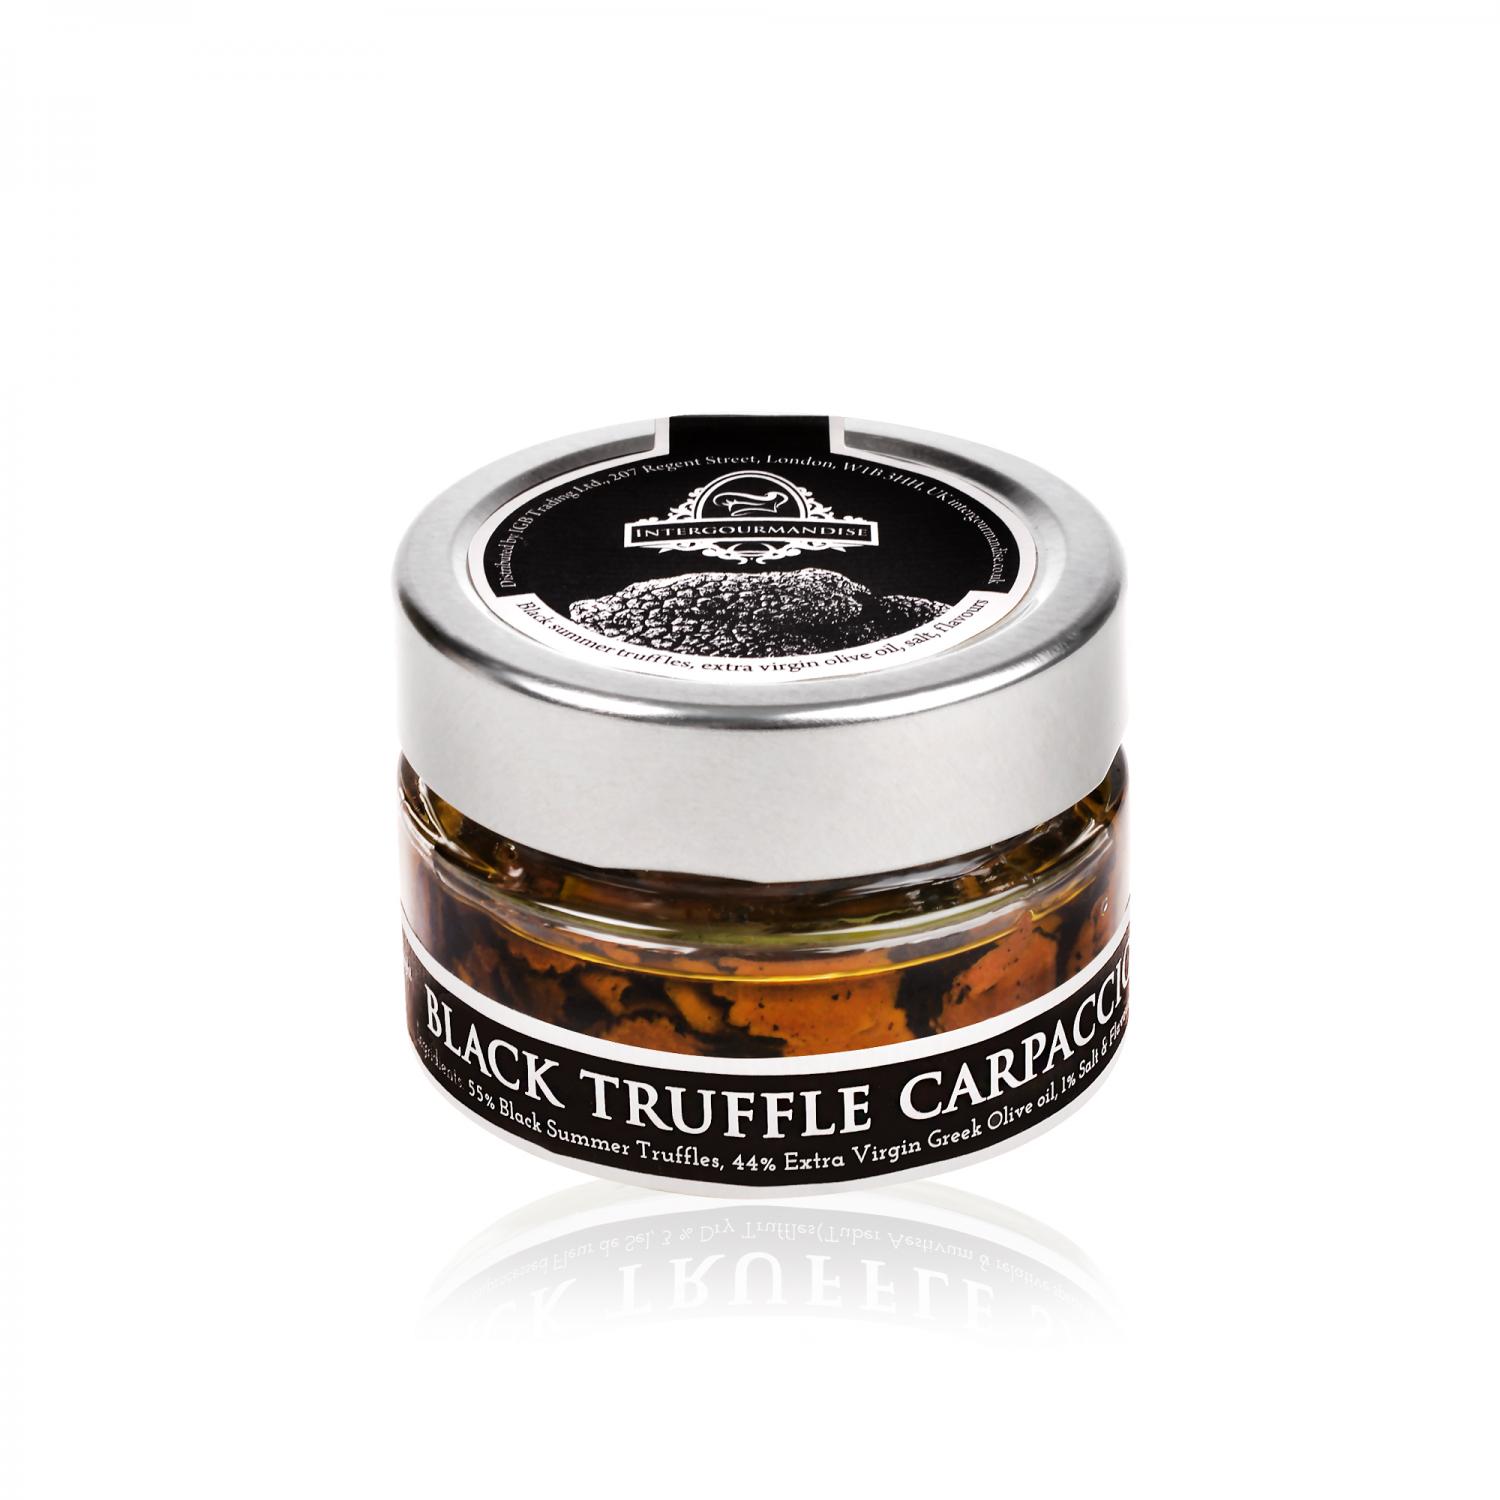 Black Truffle Carpaccio 100 Gr / 3.5 Oz